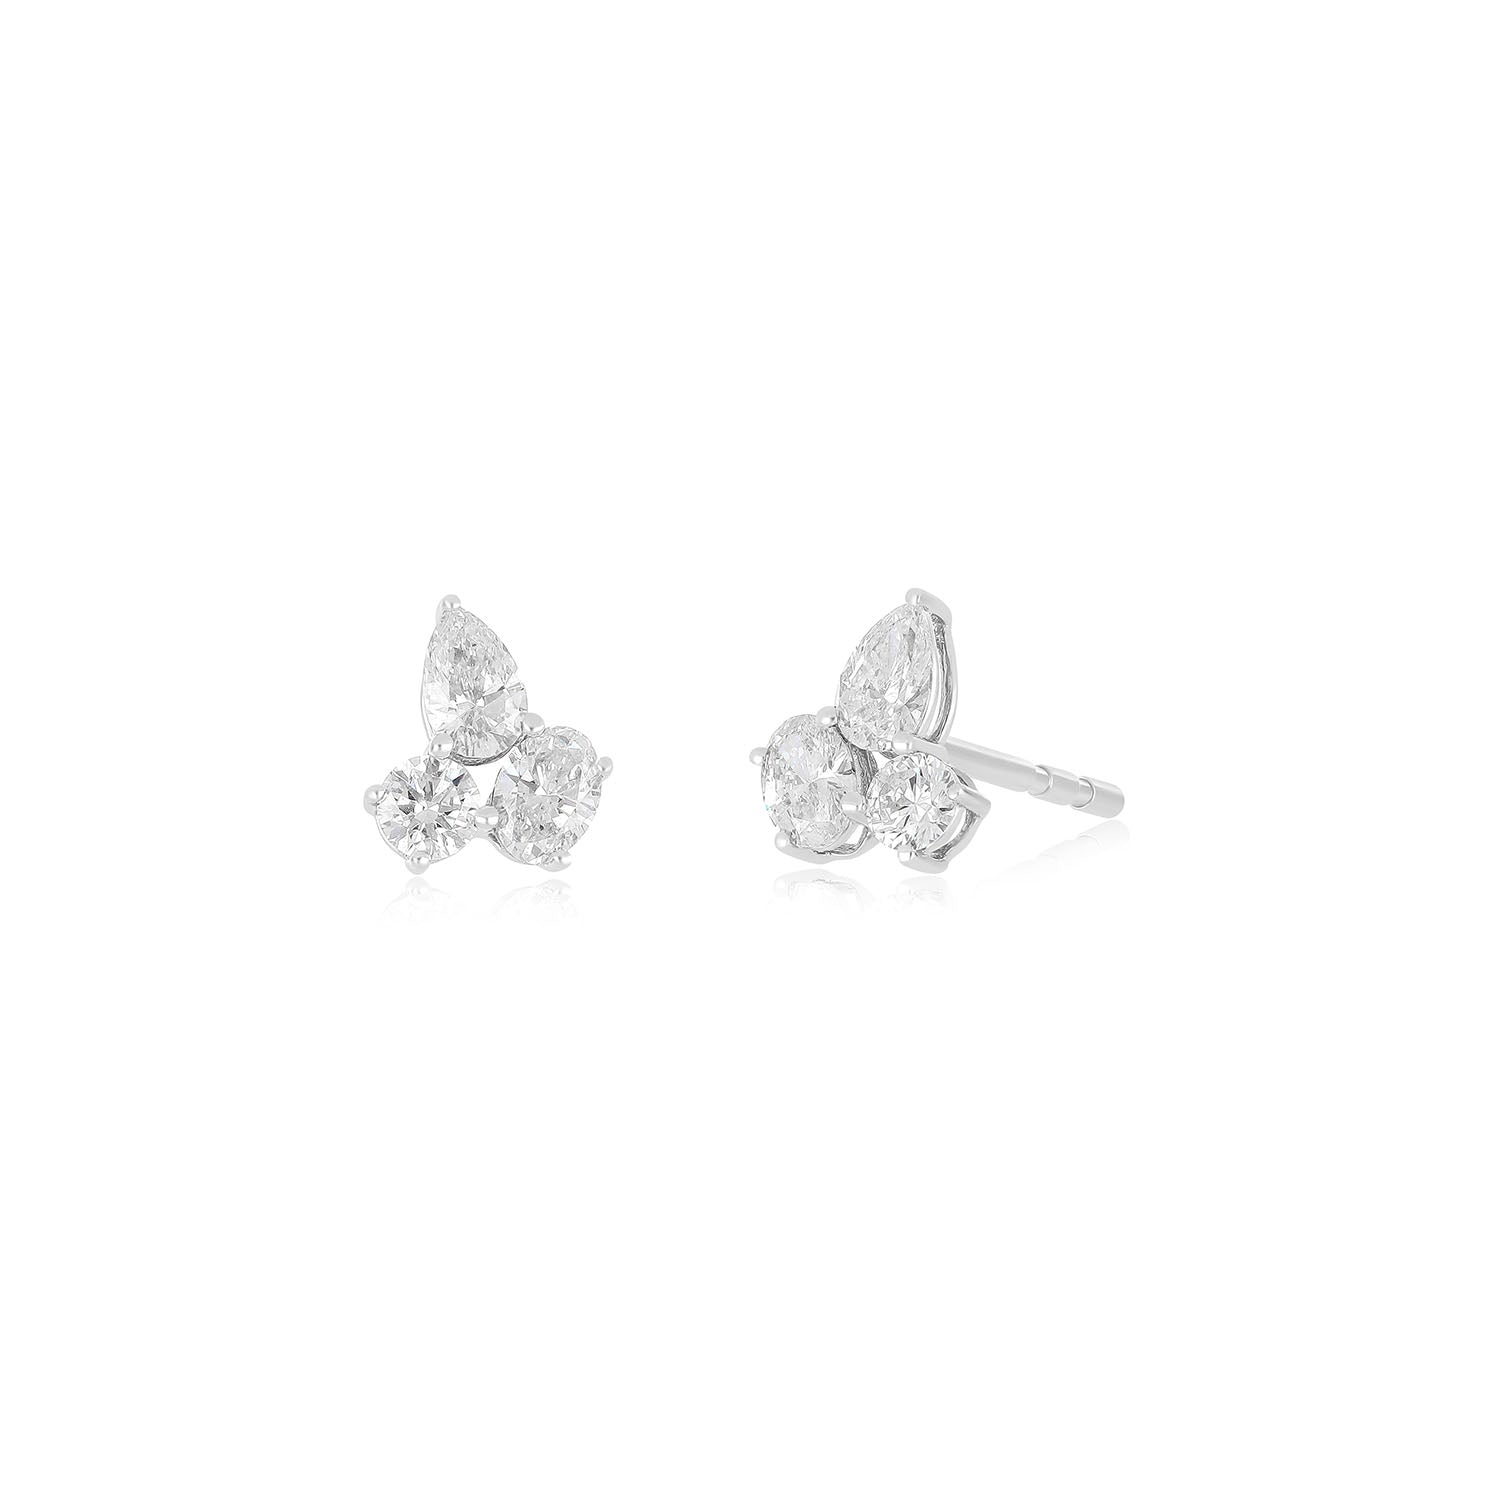 Triple Diamond Cluster Stud Earrings in 14k white gold